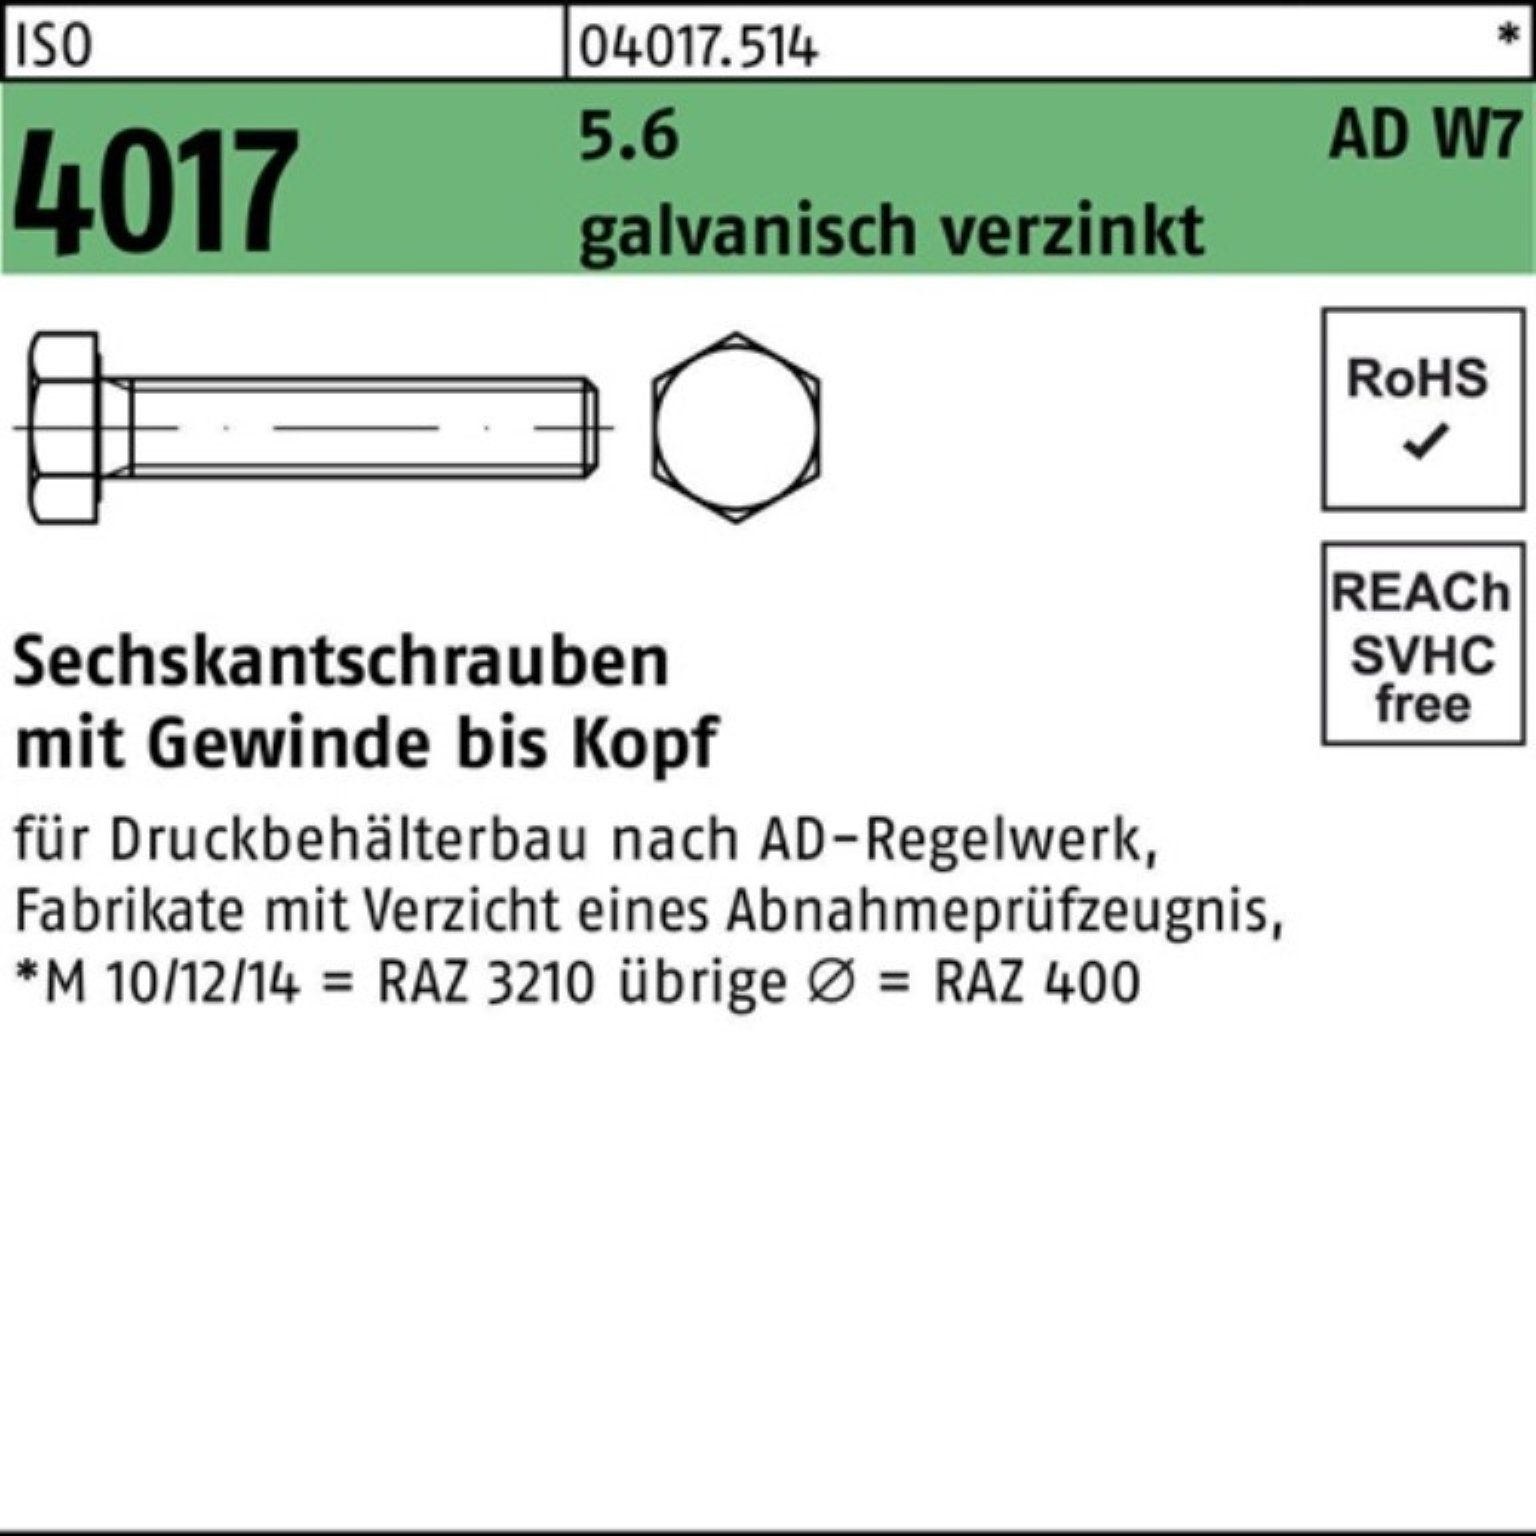 Bufab Sechskantschraube 100er Pack 140 Sechskantschraube M27x AD 5.6 4017 VG W7 ISO galv.verz